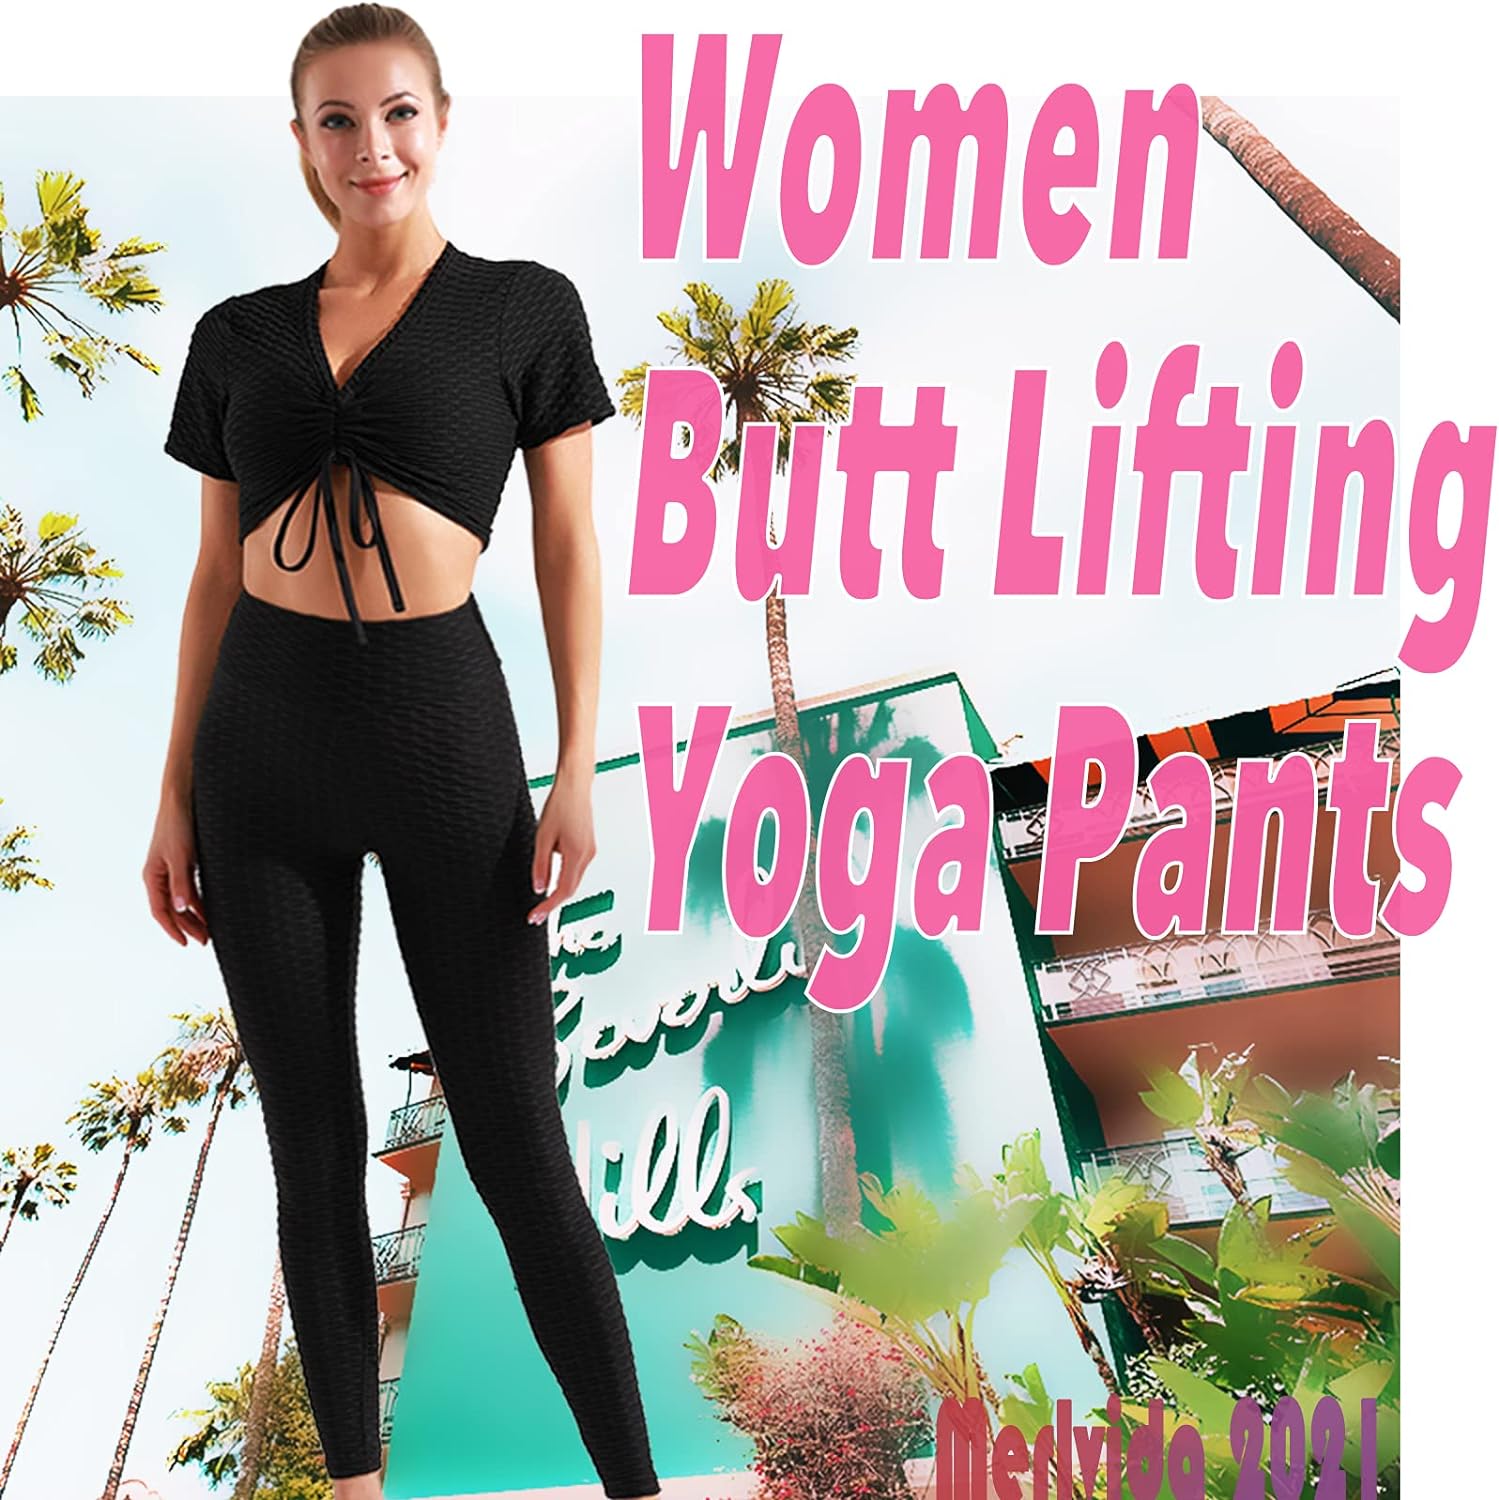 Leggings Femme Push Up  Anti-Cellulite | Vida Legging Sport Yoga | Fitnessterapy